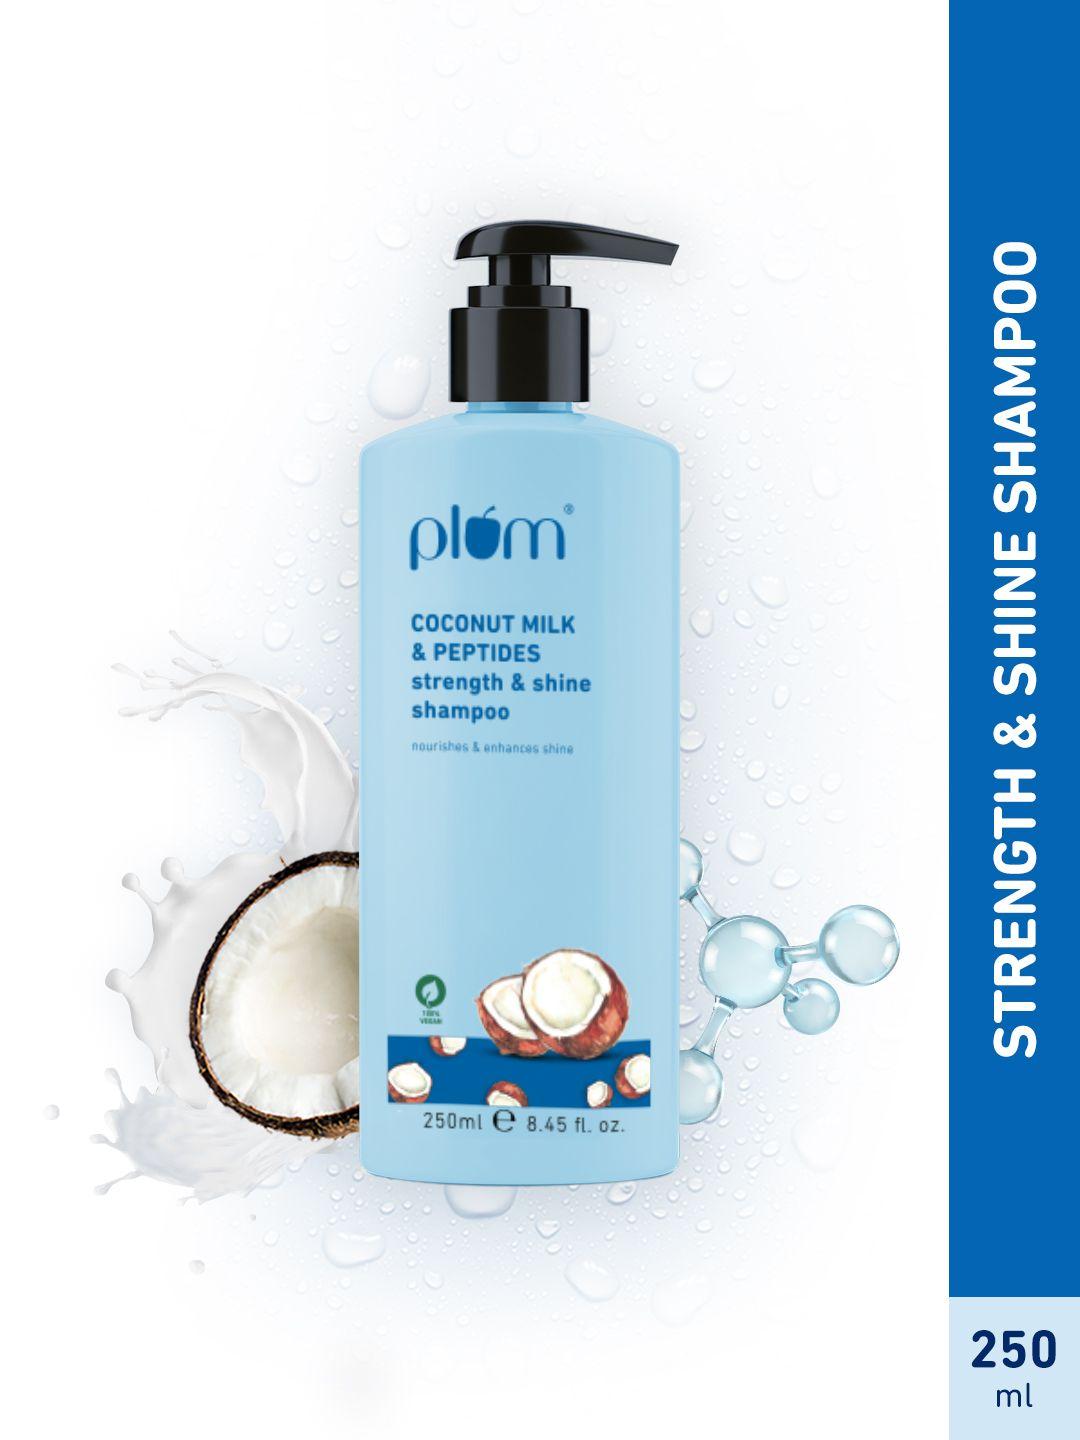 plum coconut milk & peptides strength & shine shampoo - 250ml